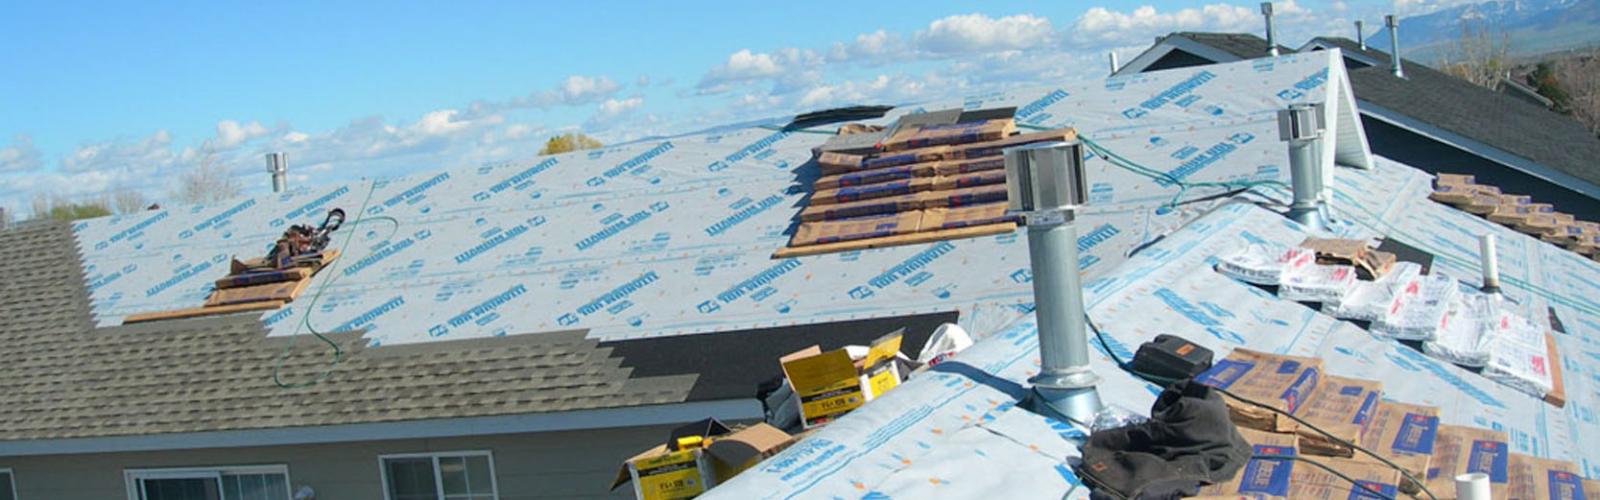 installing shingles bozeman mt roof hail damage Harmon Enterprises Construction